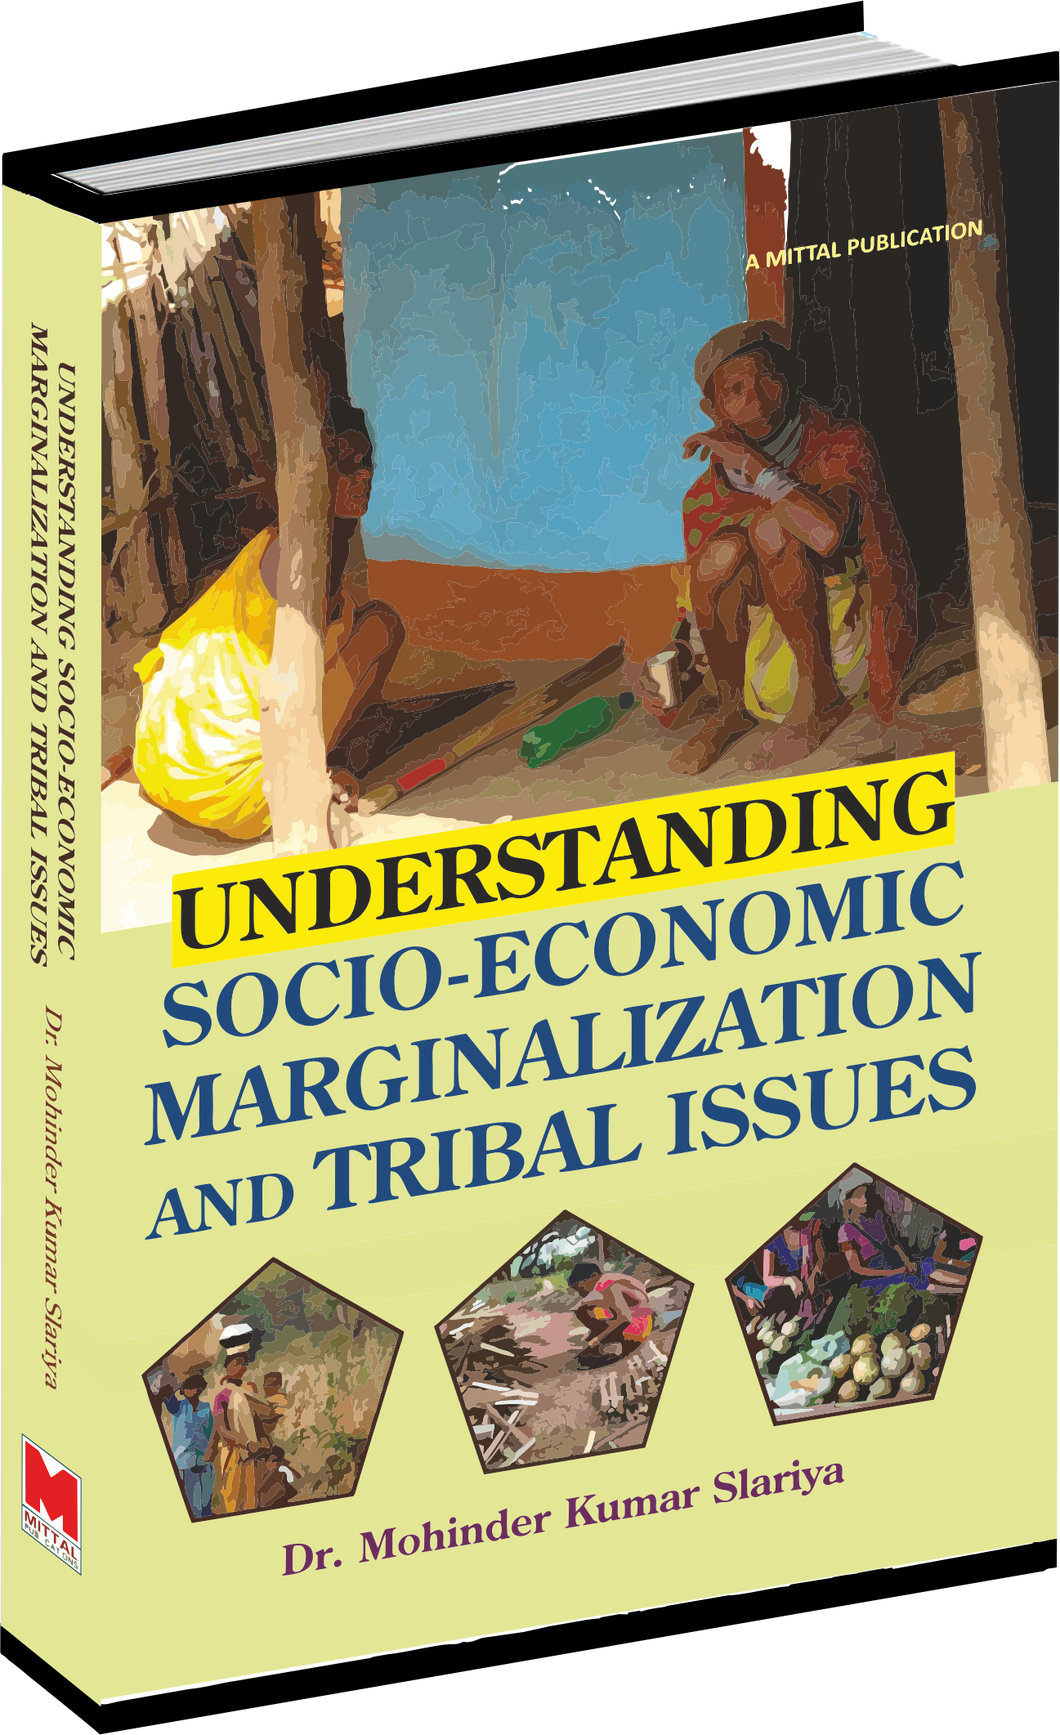 Understanding Socio-Economic Magrinalization and Tribal Issues by Dr. Mohinder Kumar Slariya